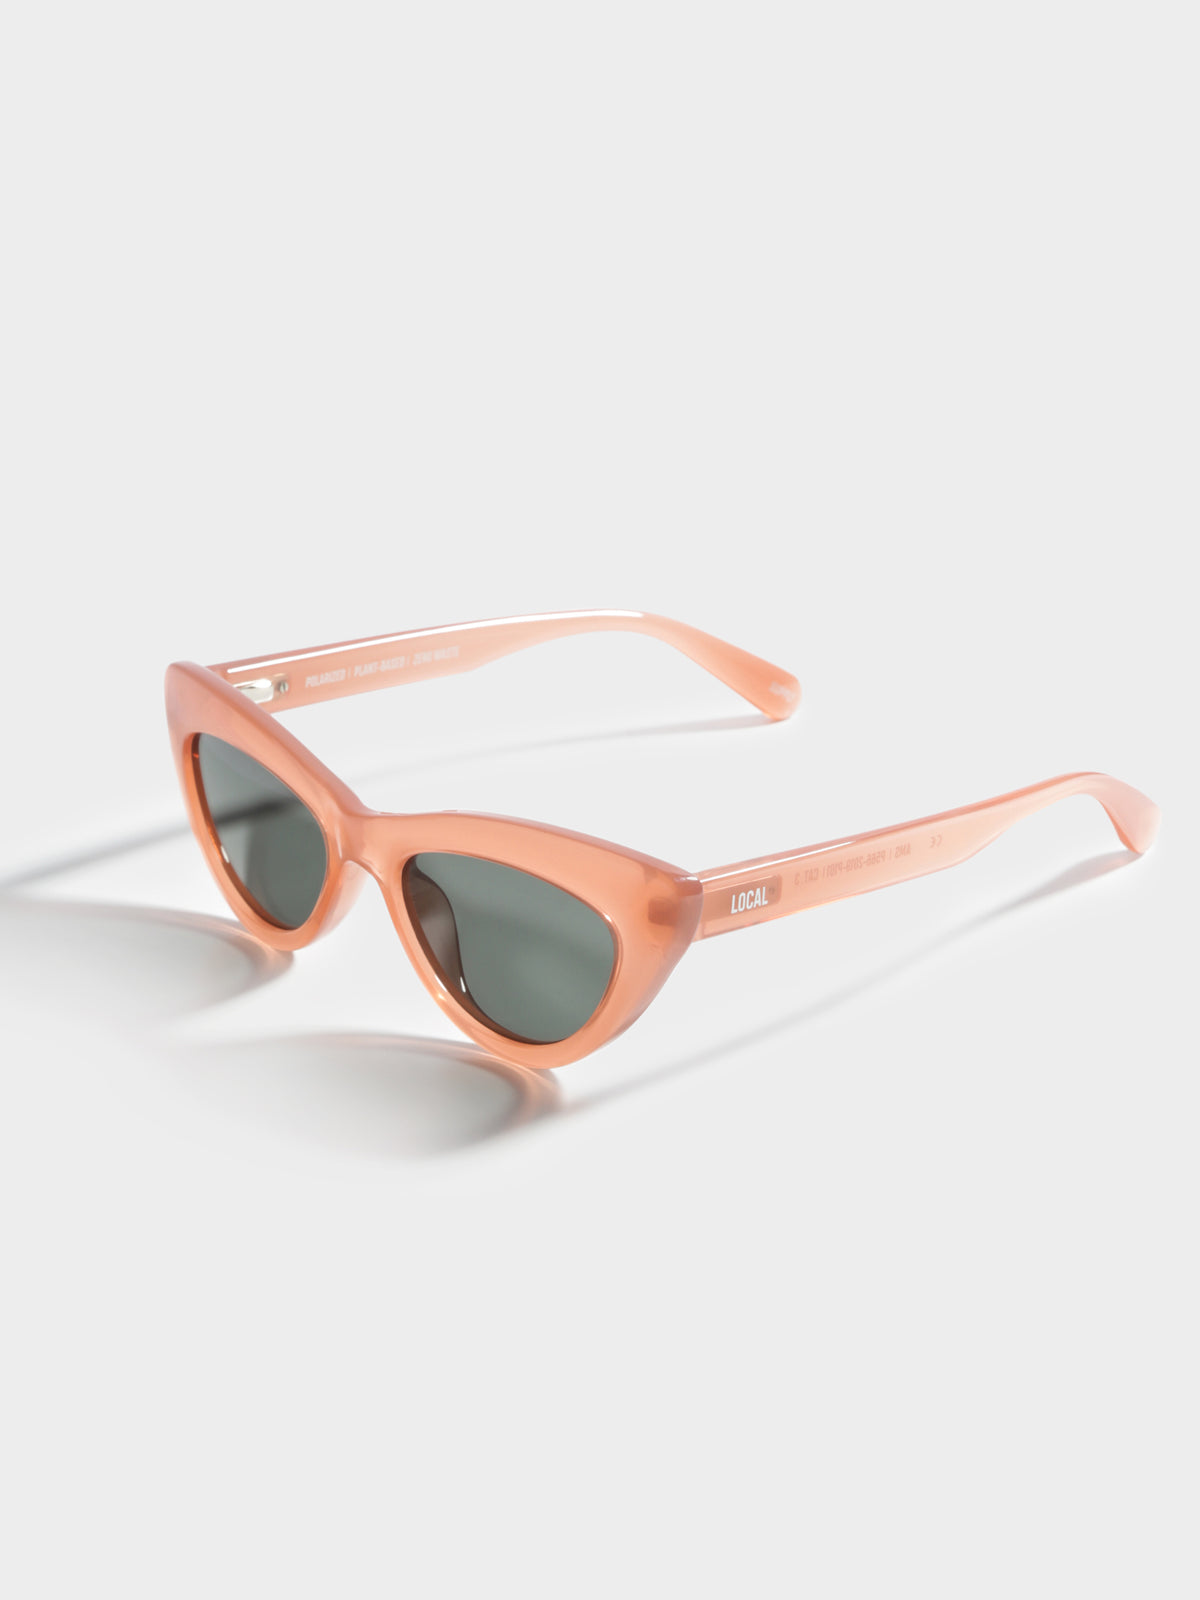 AMS Polarised Cateye Sunglasses in Polished Coral &amp; Dark Grey